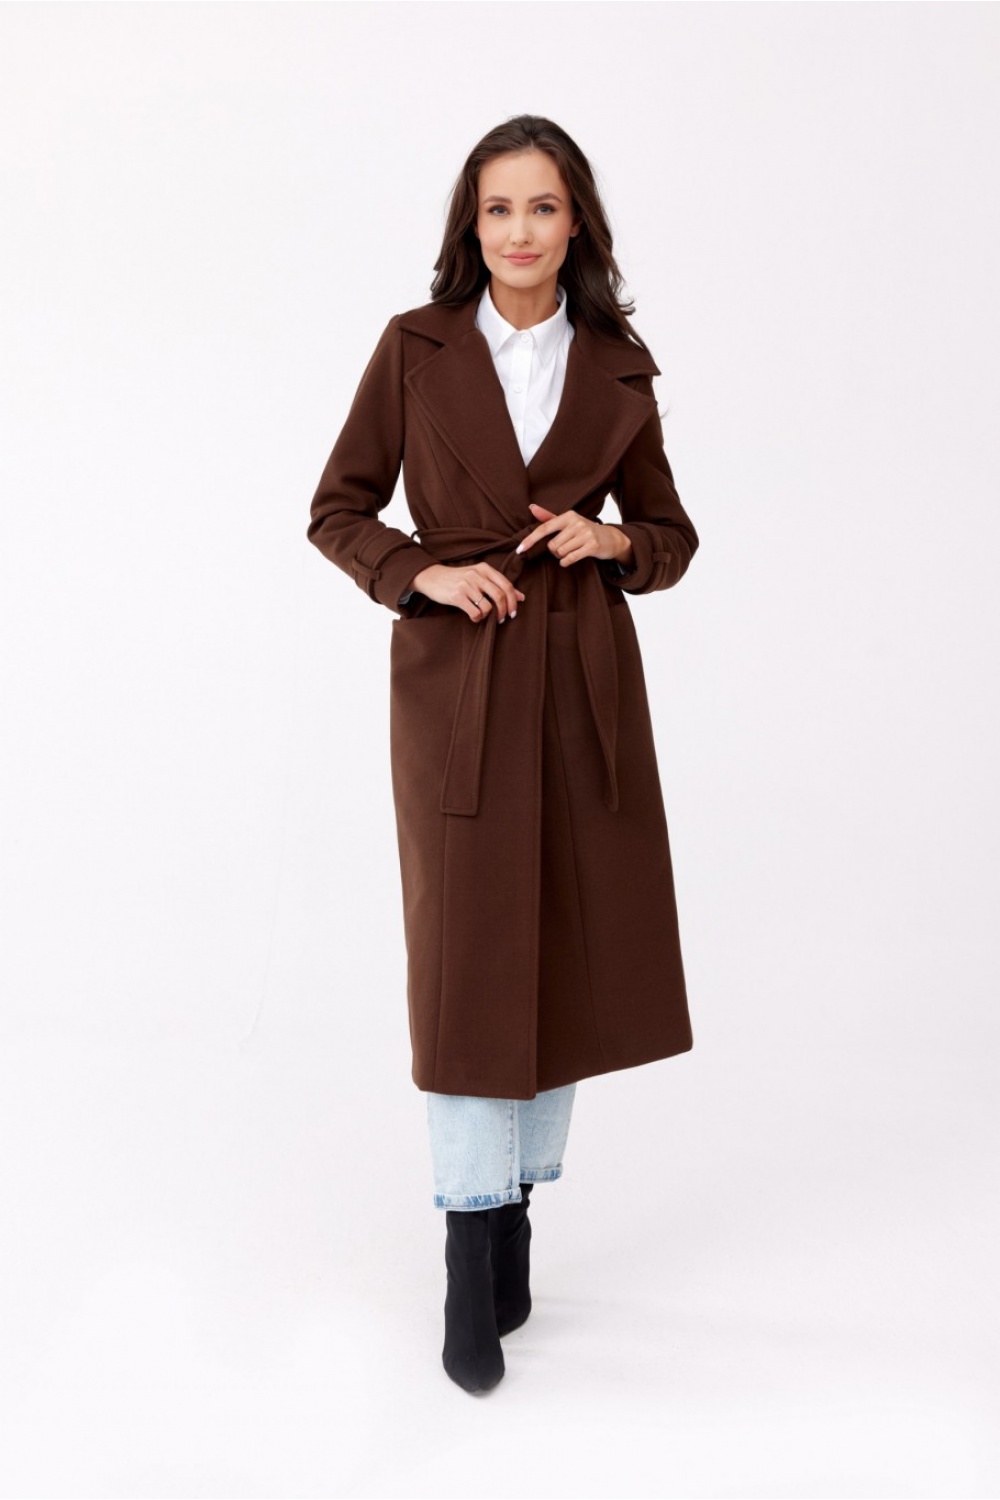  Coat model 185984 Roco Fashion  brown